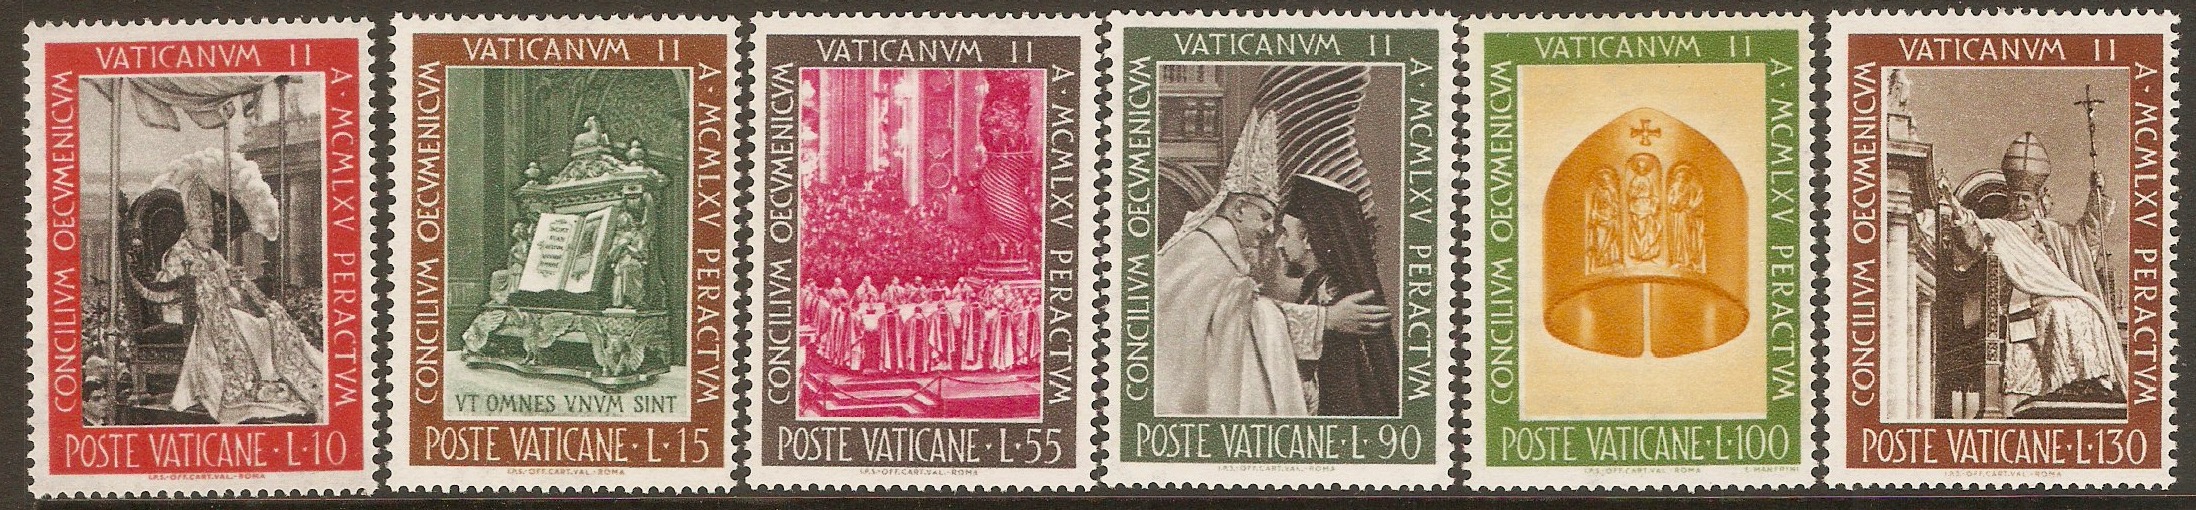 Vatican City 1966 Ecumenical Council set. SG483-SG488.